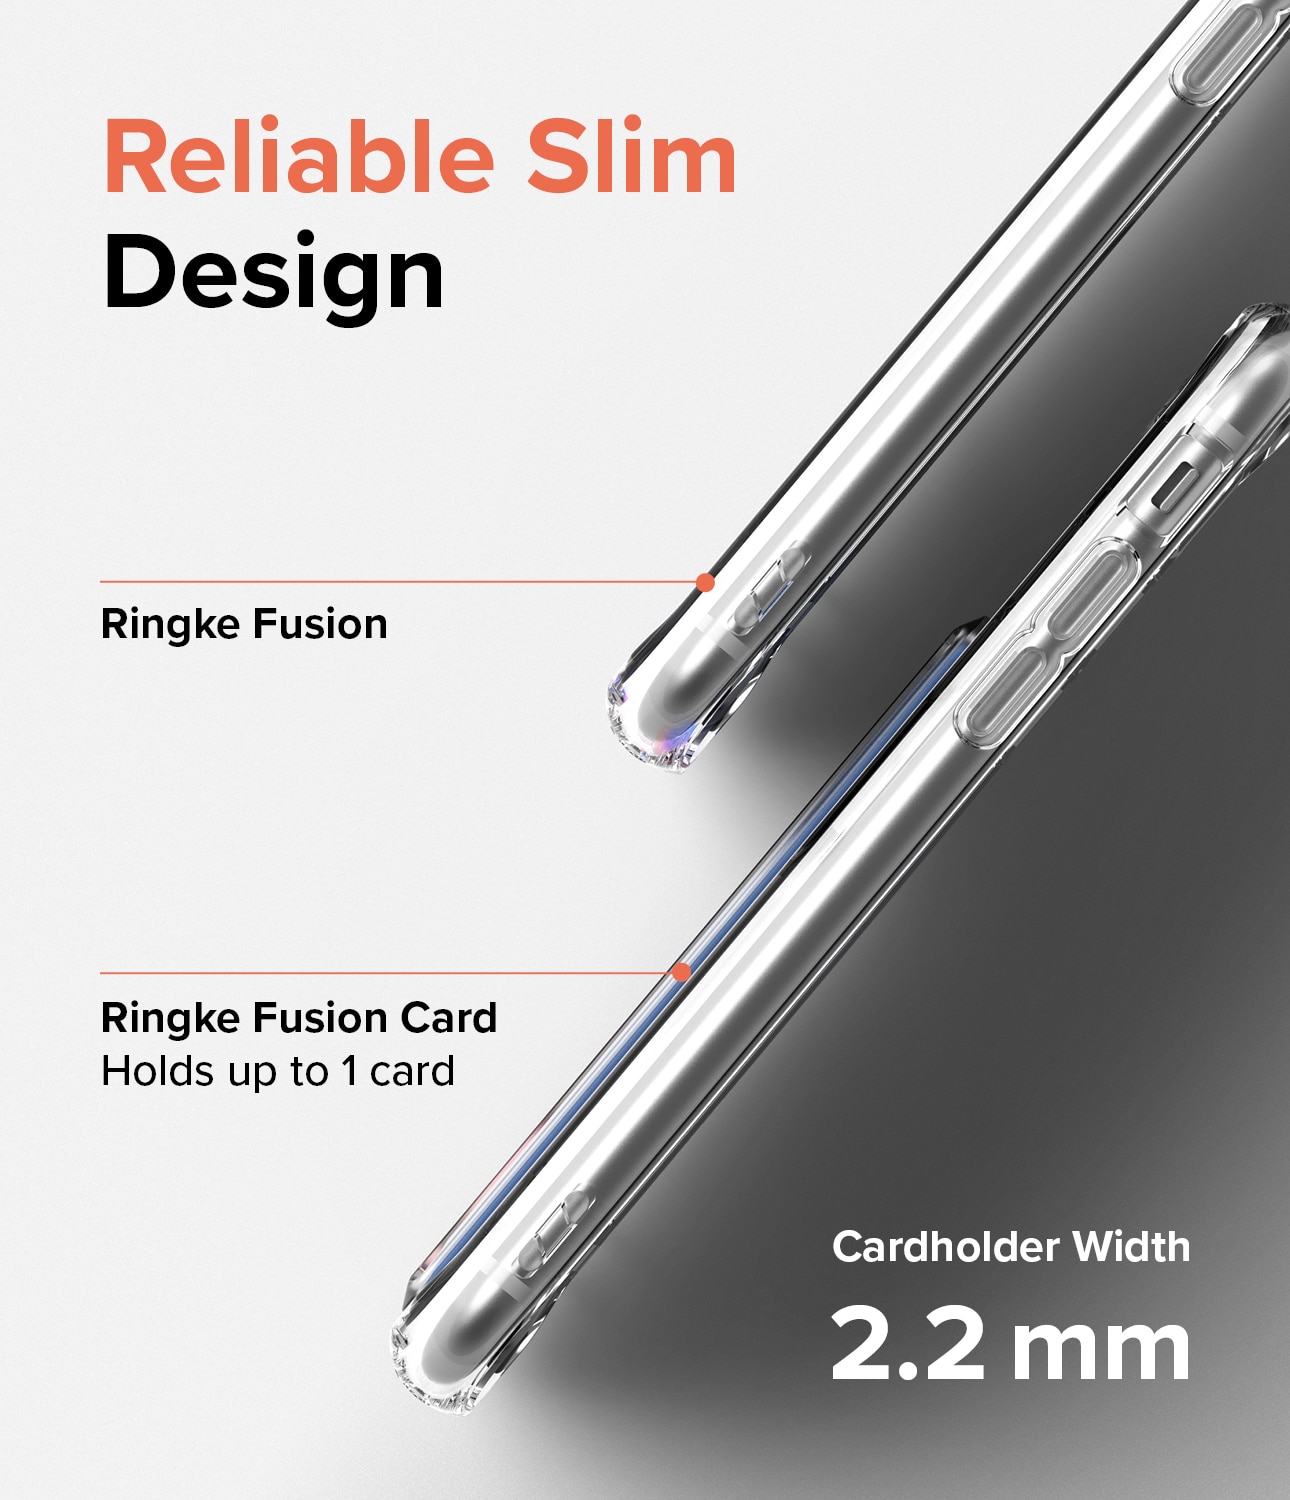 Funda Fusion Card iPhone 8 Transparente